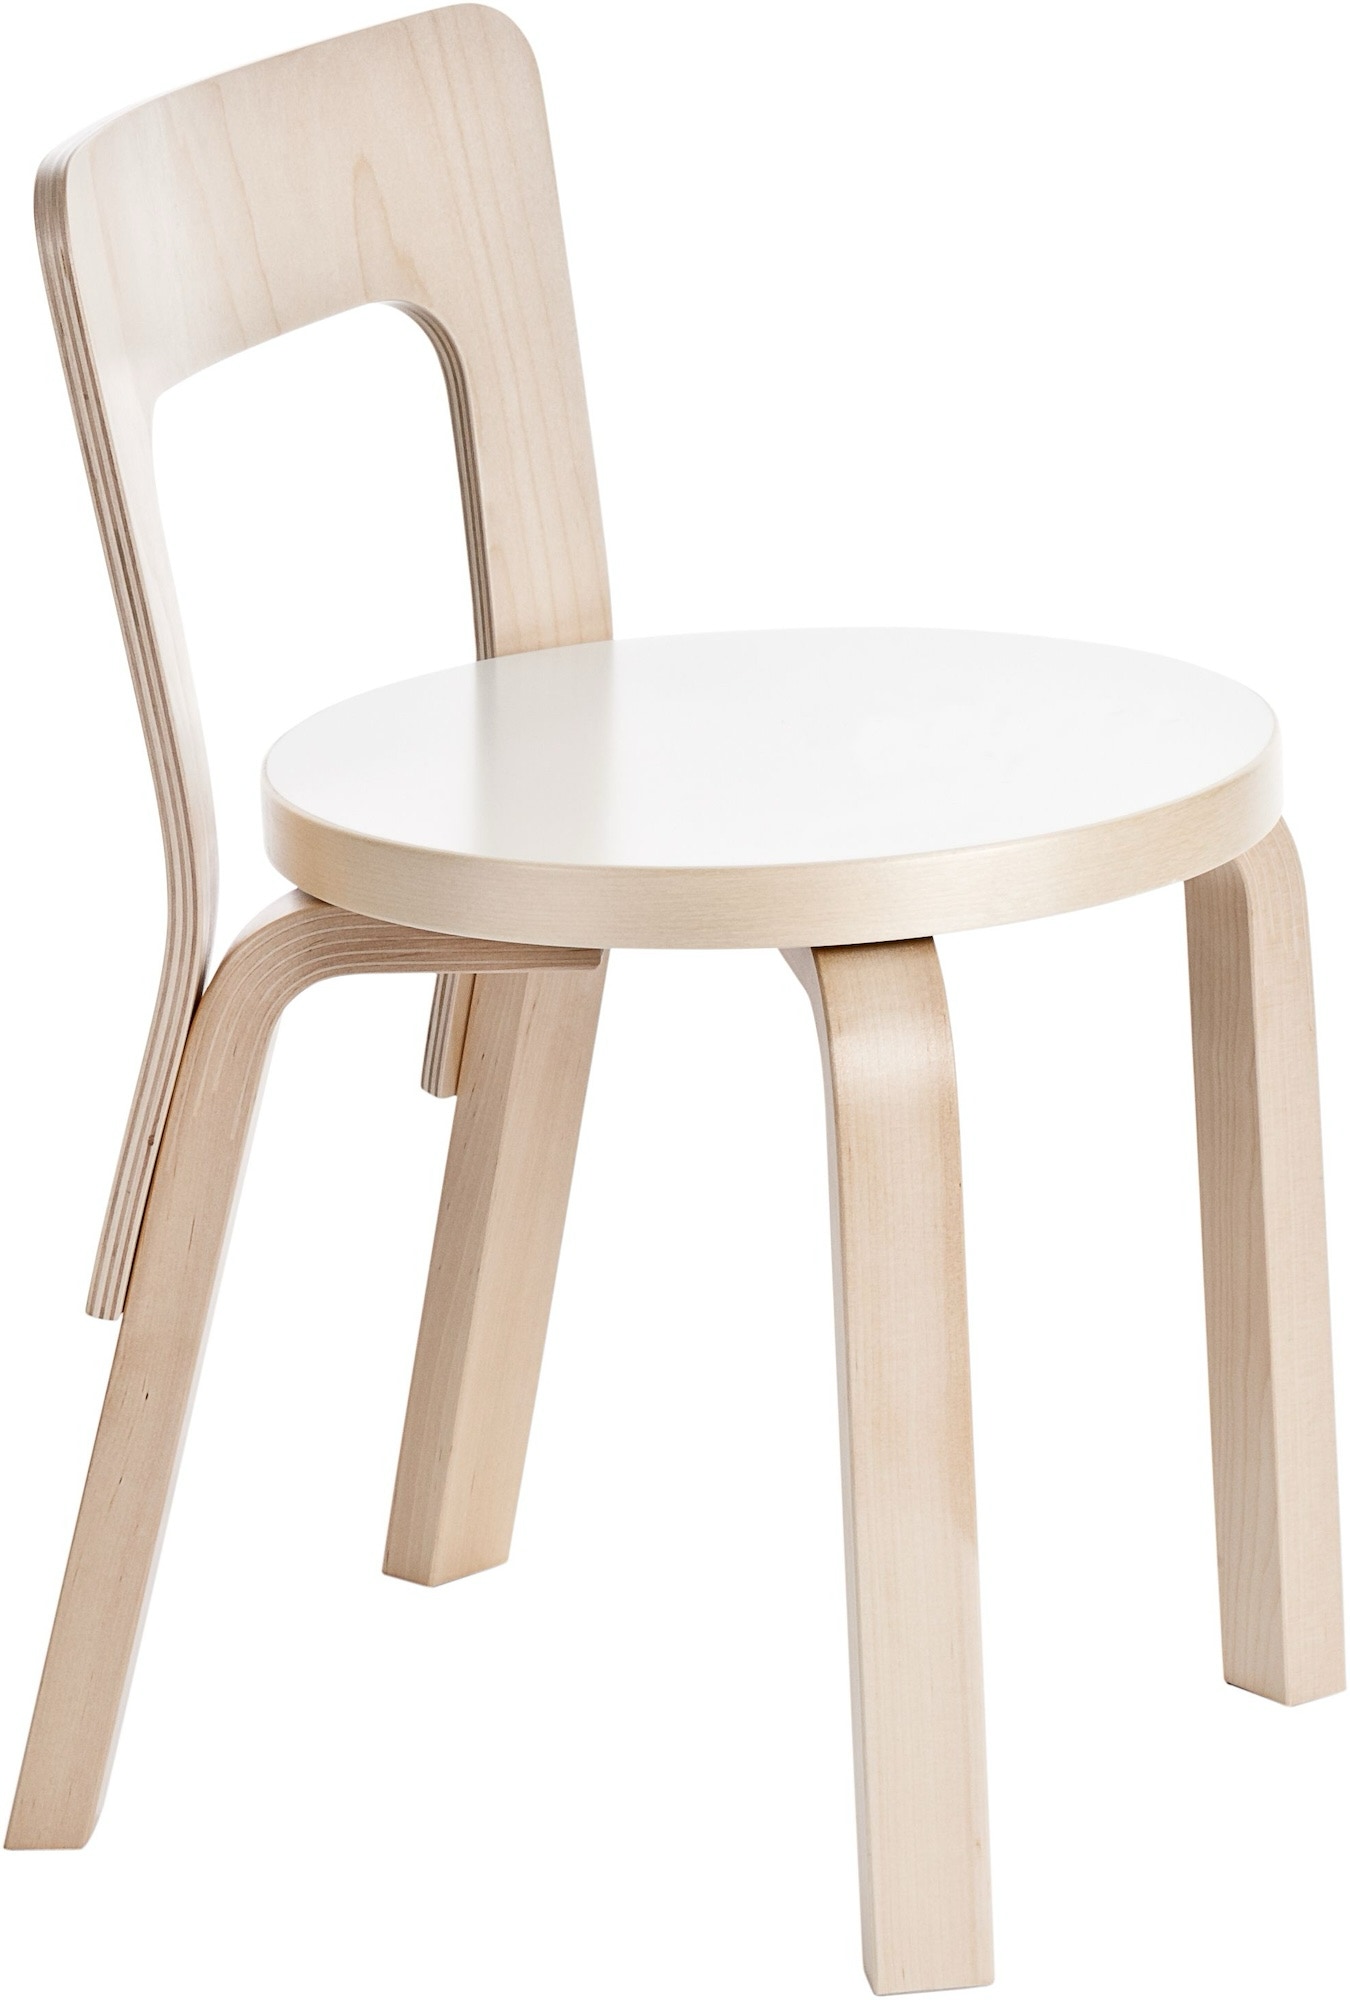 Artek 🇫🇮 Alvar Aalto Children's Furniture